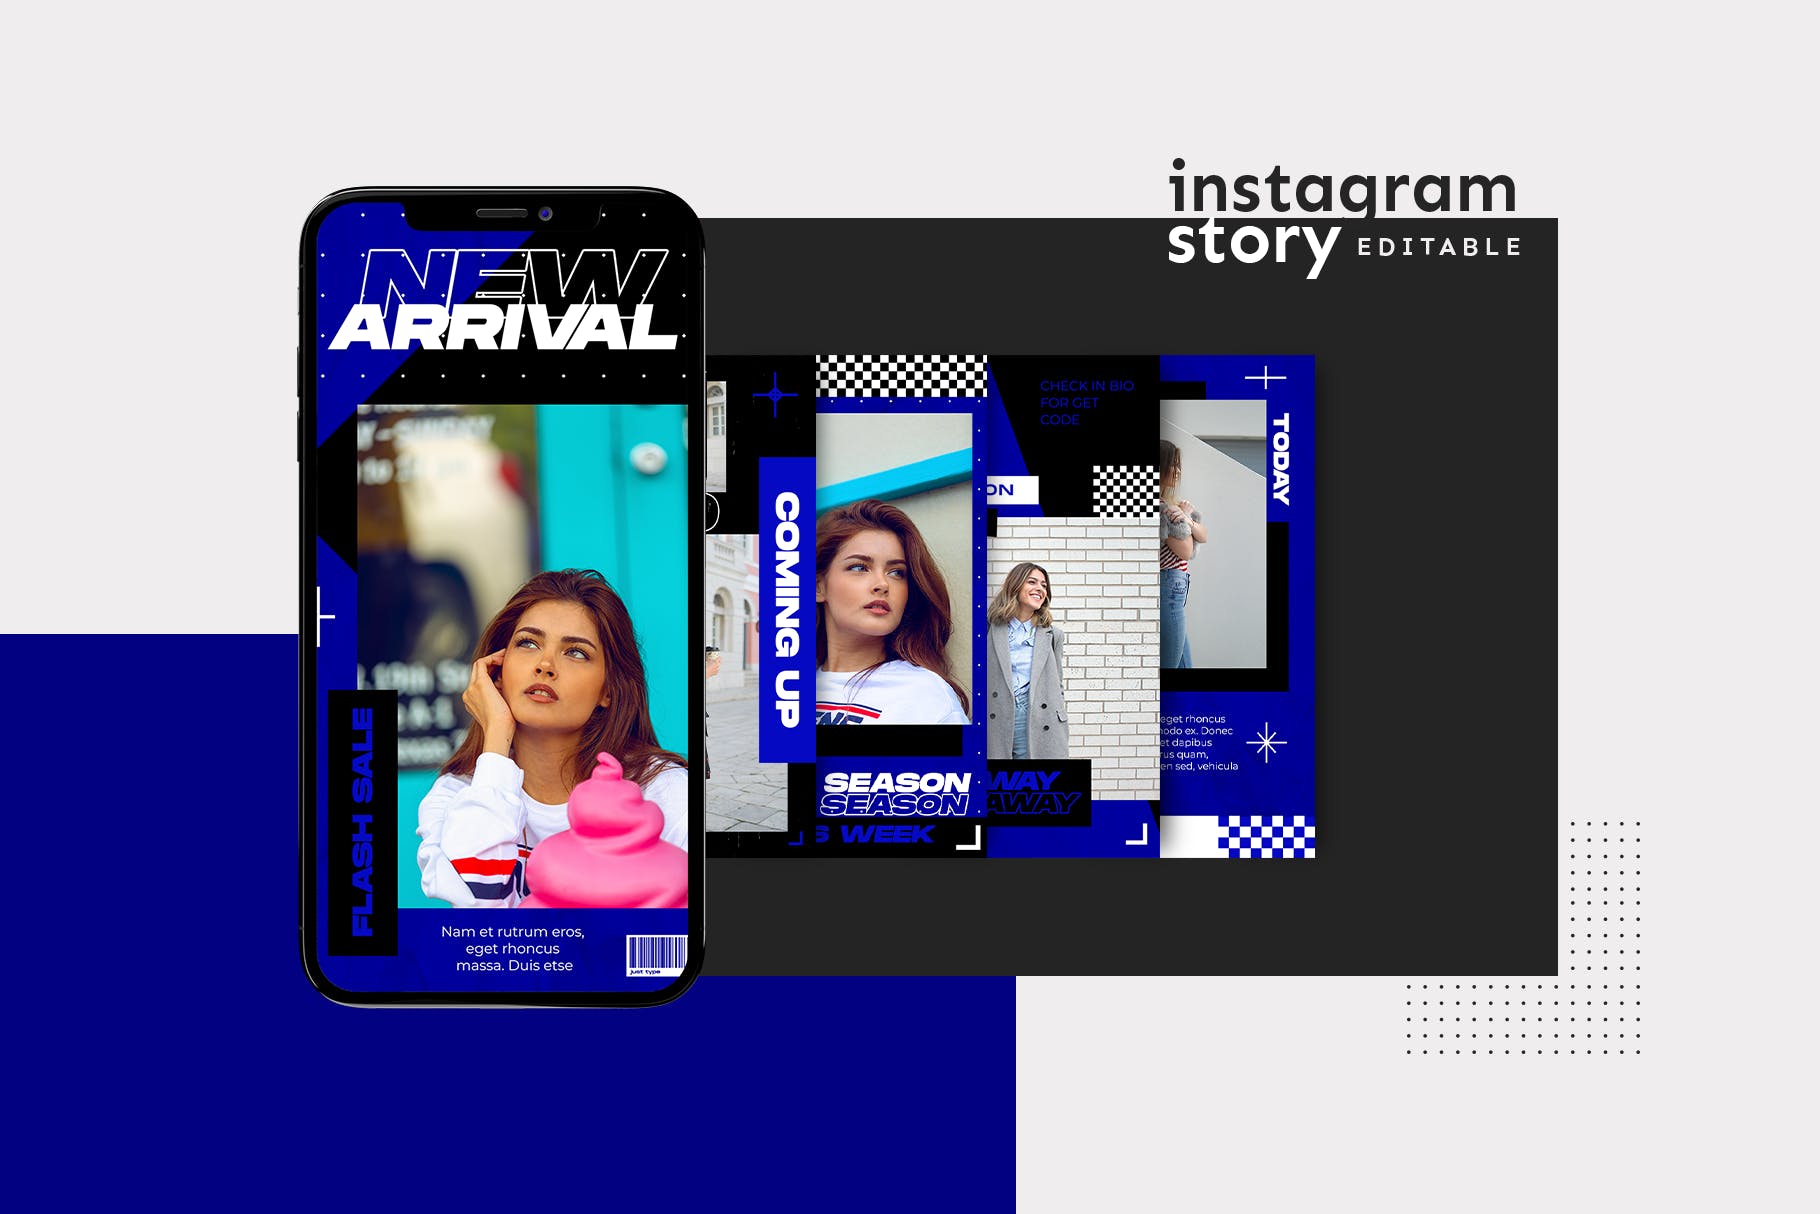 Instagram社交平台新品发布推广设计模板16图库精选 Instagram Story Template插图(1)